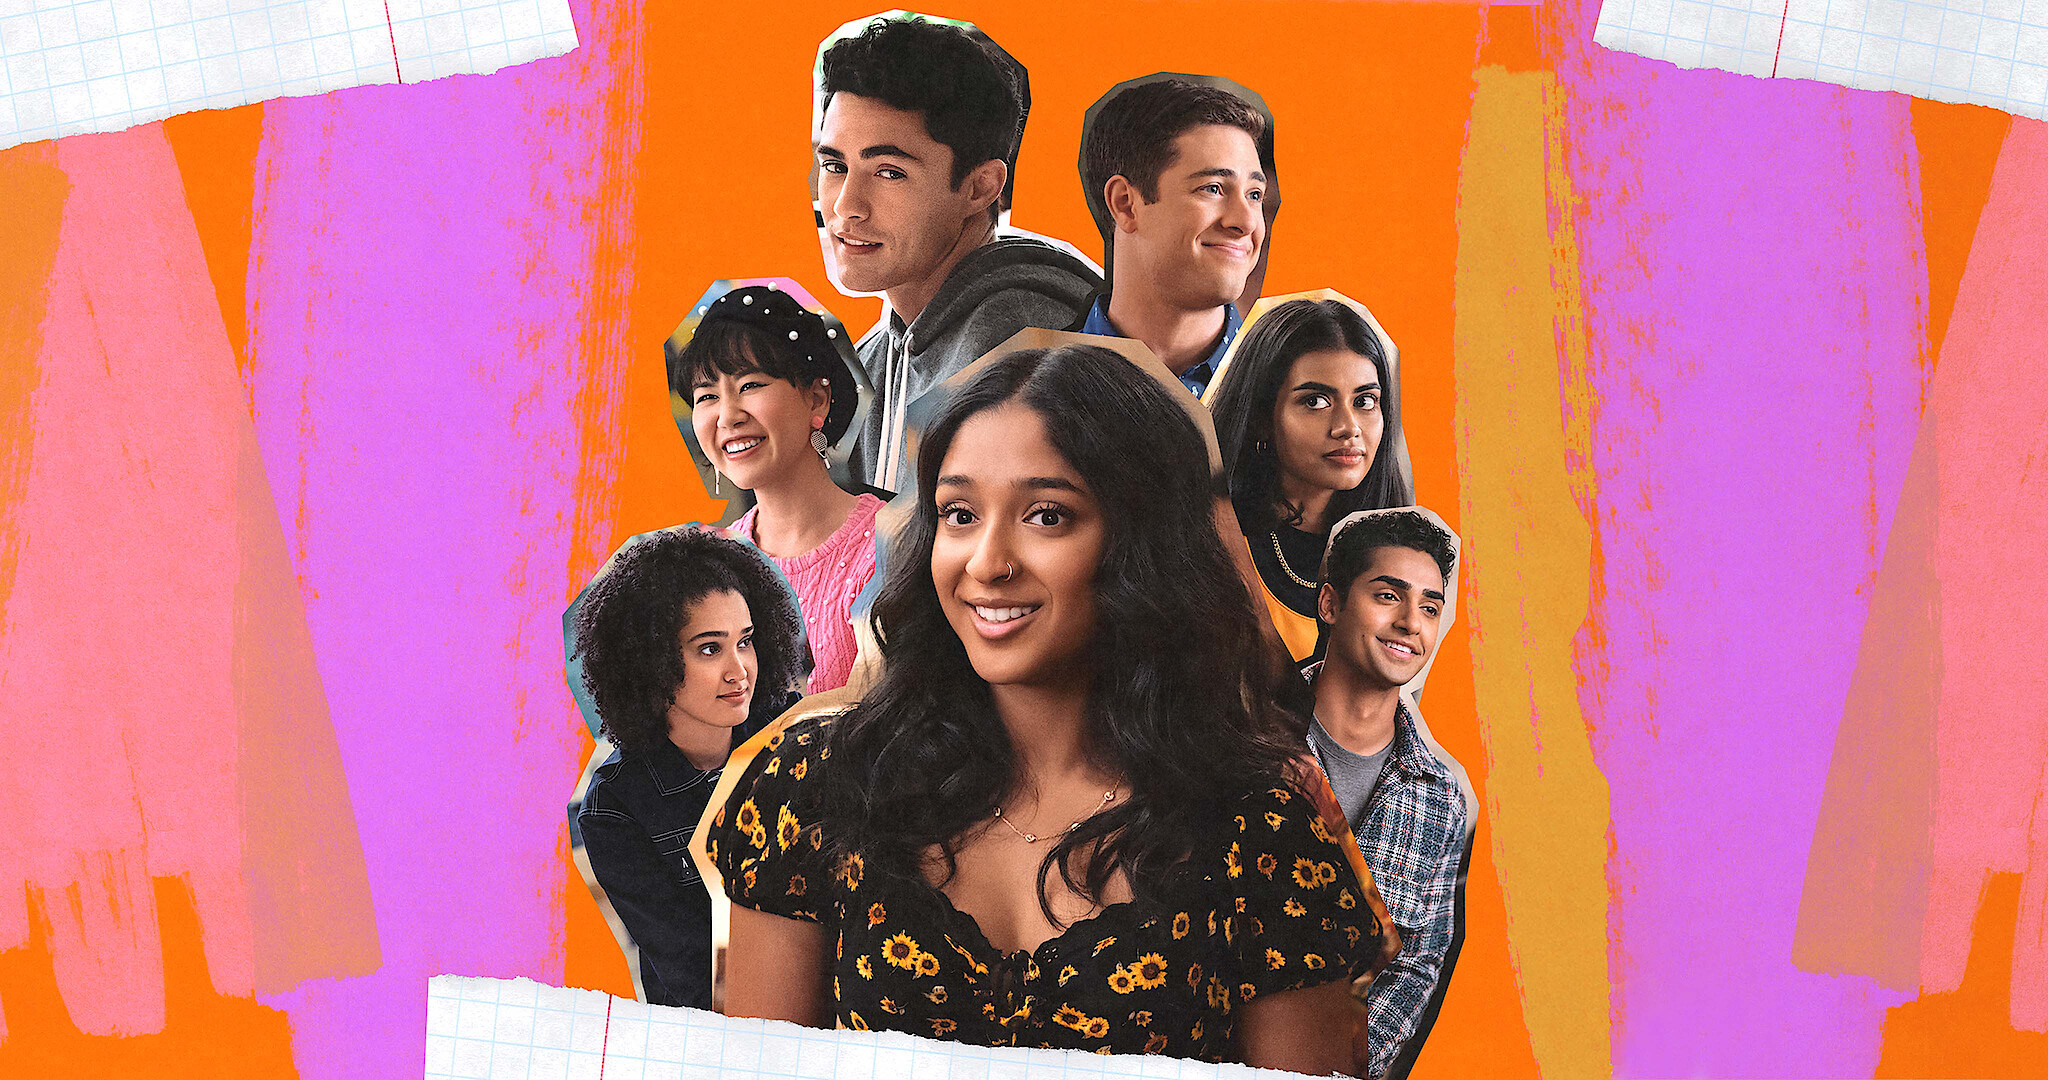 Never Have I Ever Cast Guide: Meet Devi and Her Classmates - Netflix Tudum